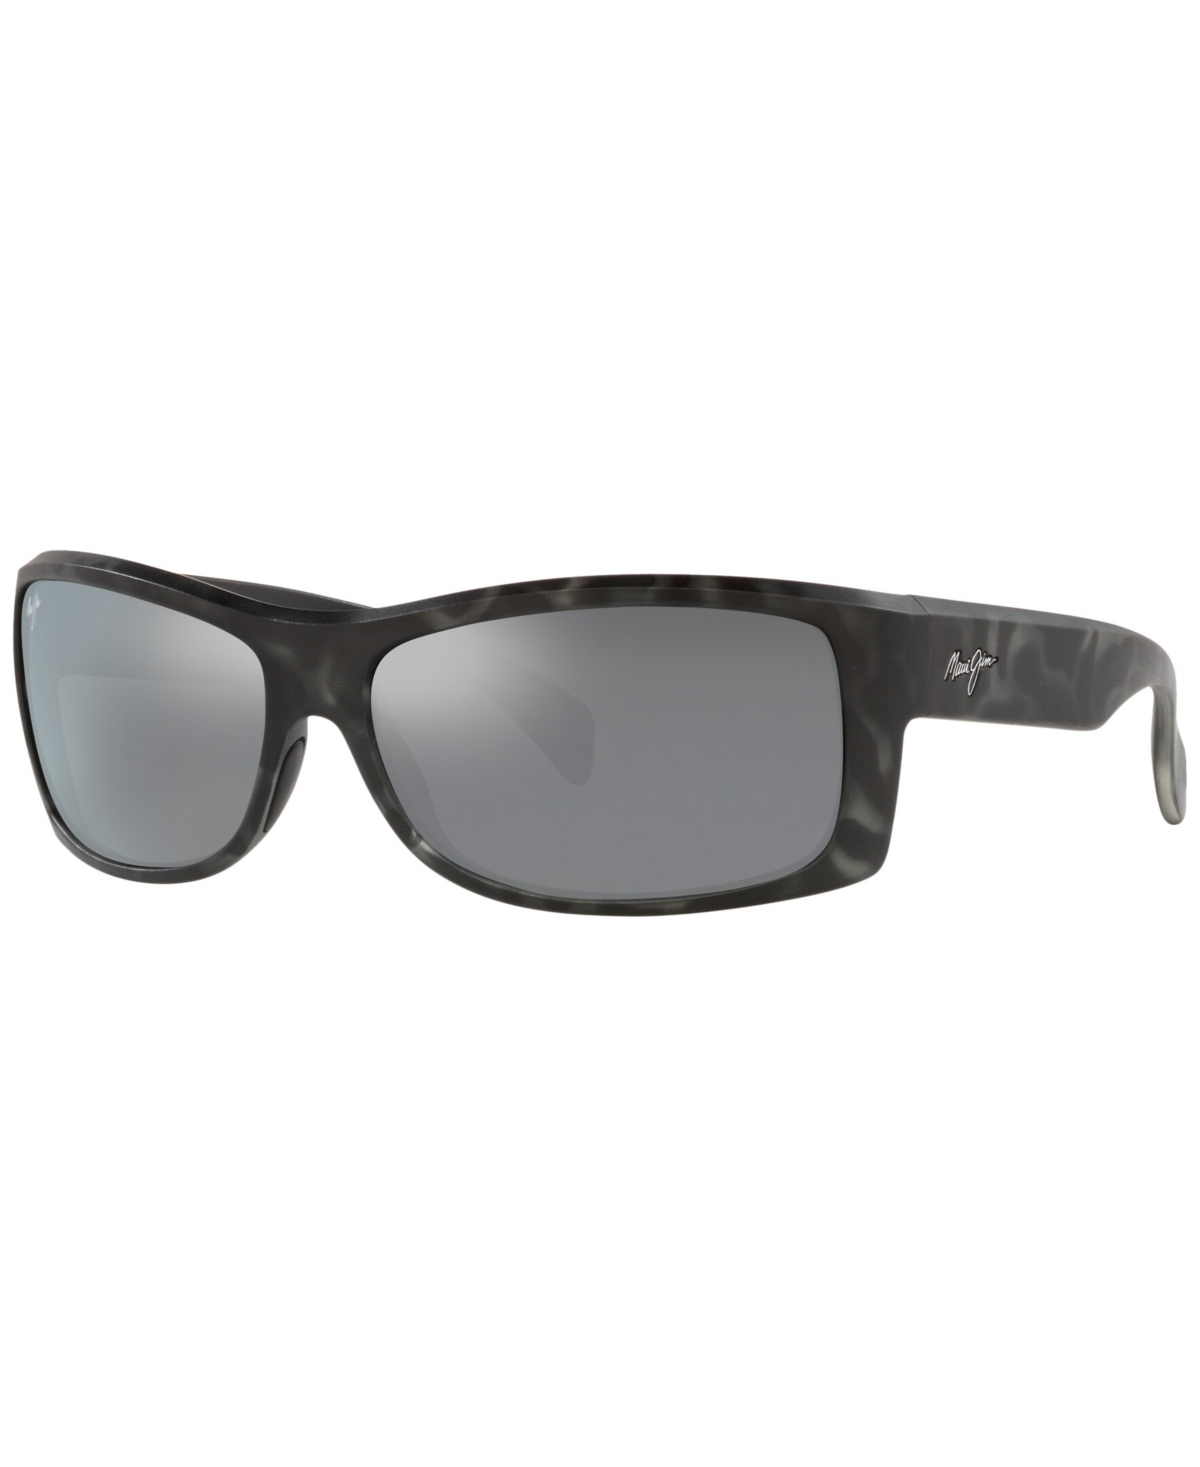 Maui Jim Unisex Polarized Sunglasses, Equator 65 In Tortoise Blonde